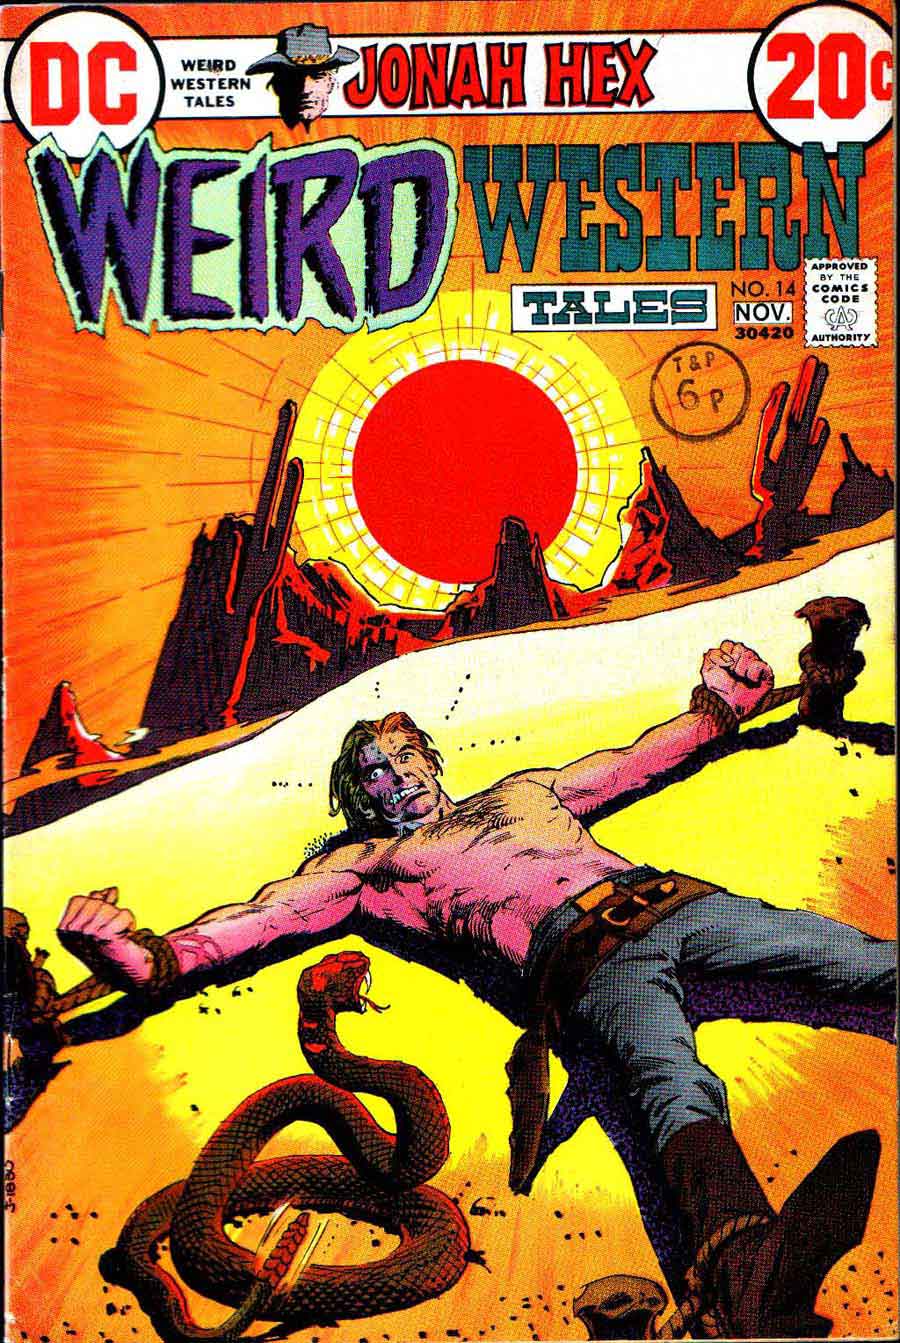 Weird Western Tales v1 #14 jonah hex dc comic book cover art by Tony Dezuniga